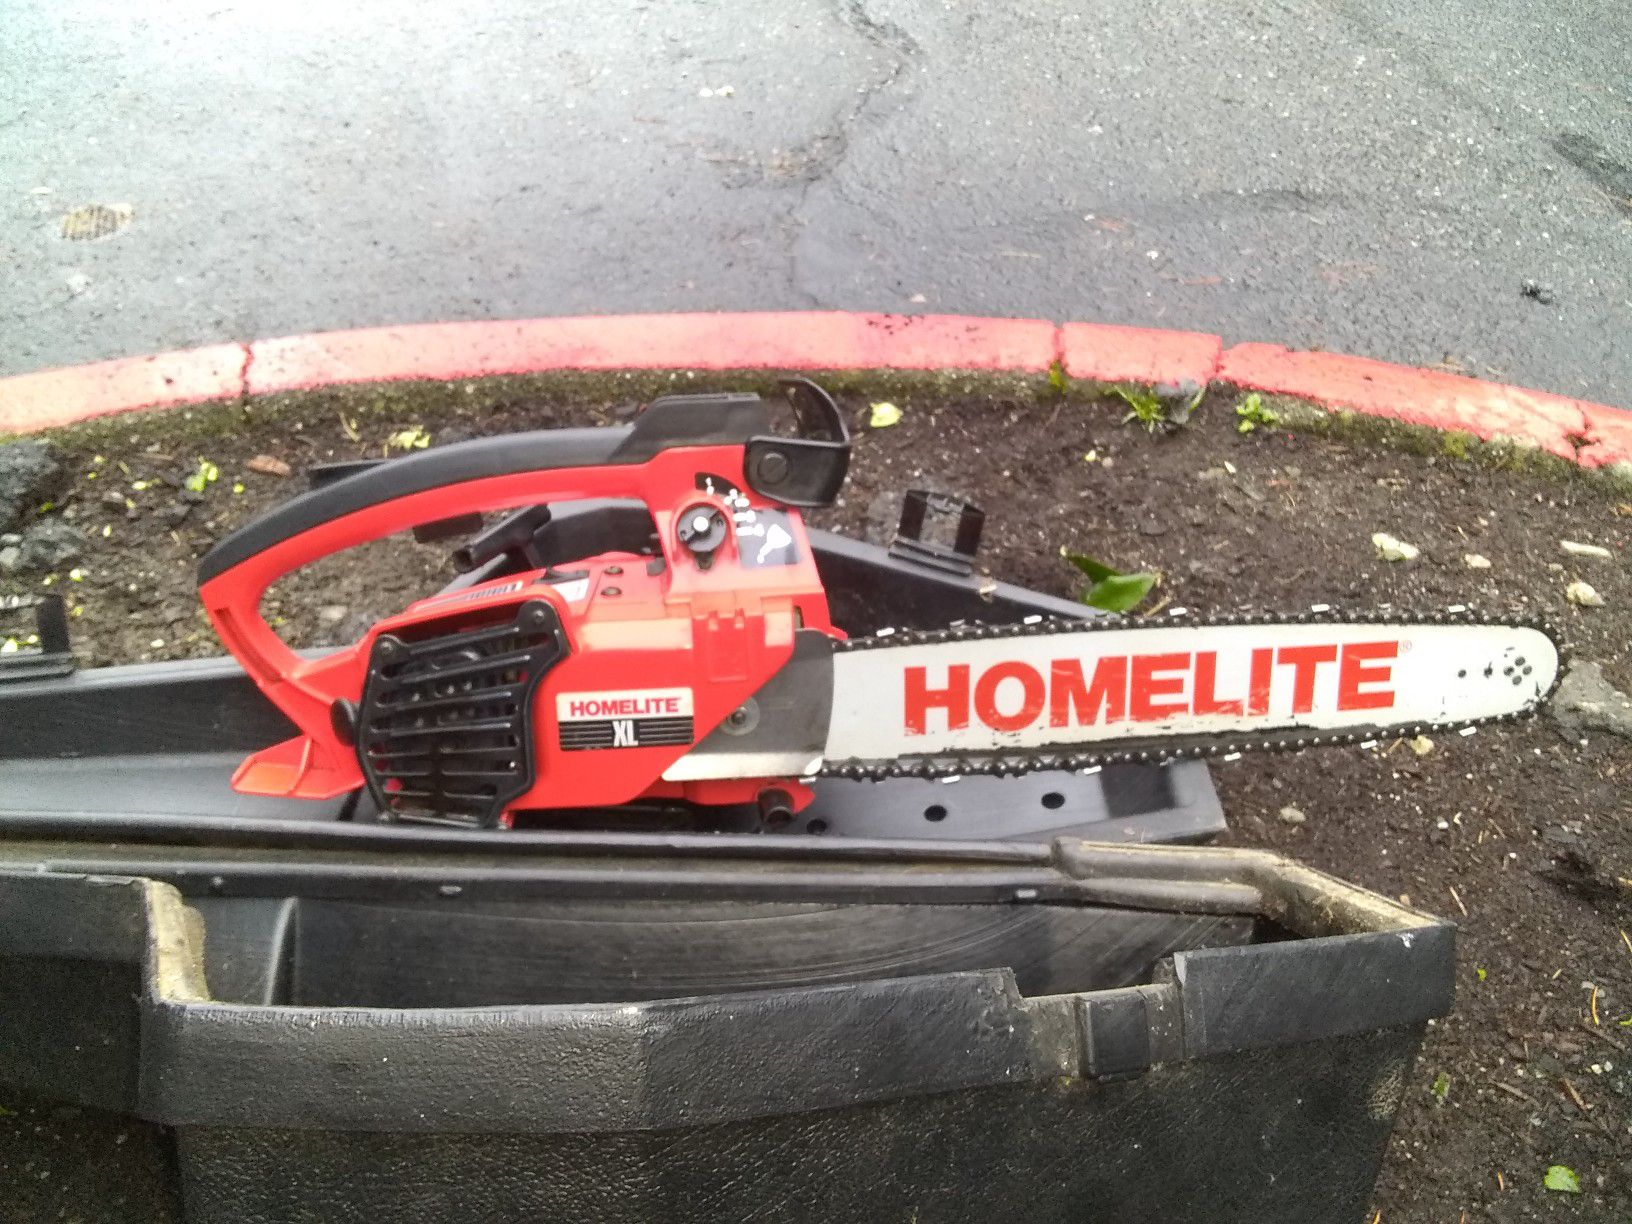 Homelite XL chainsaw